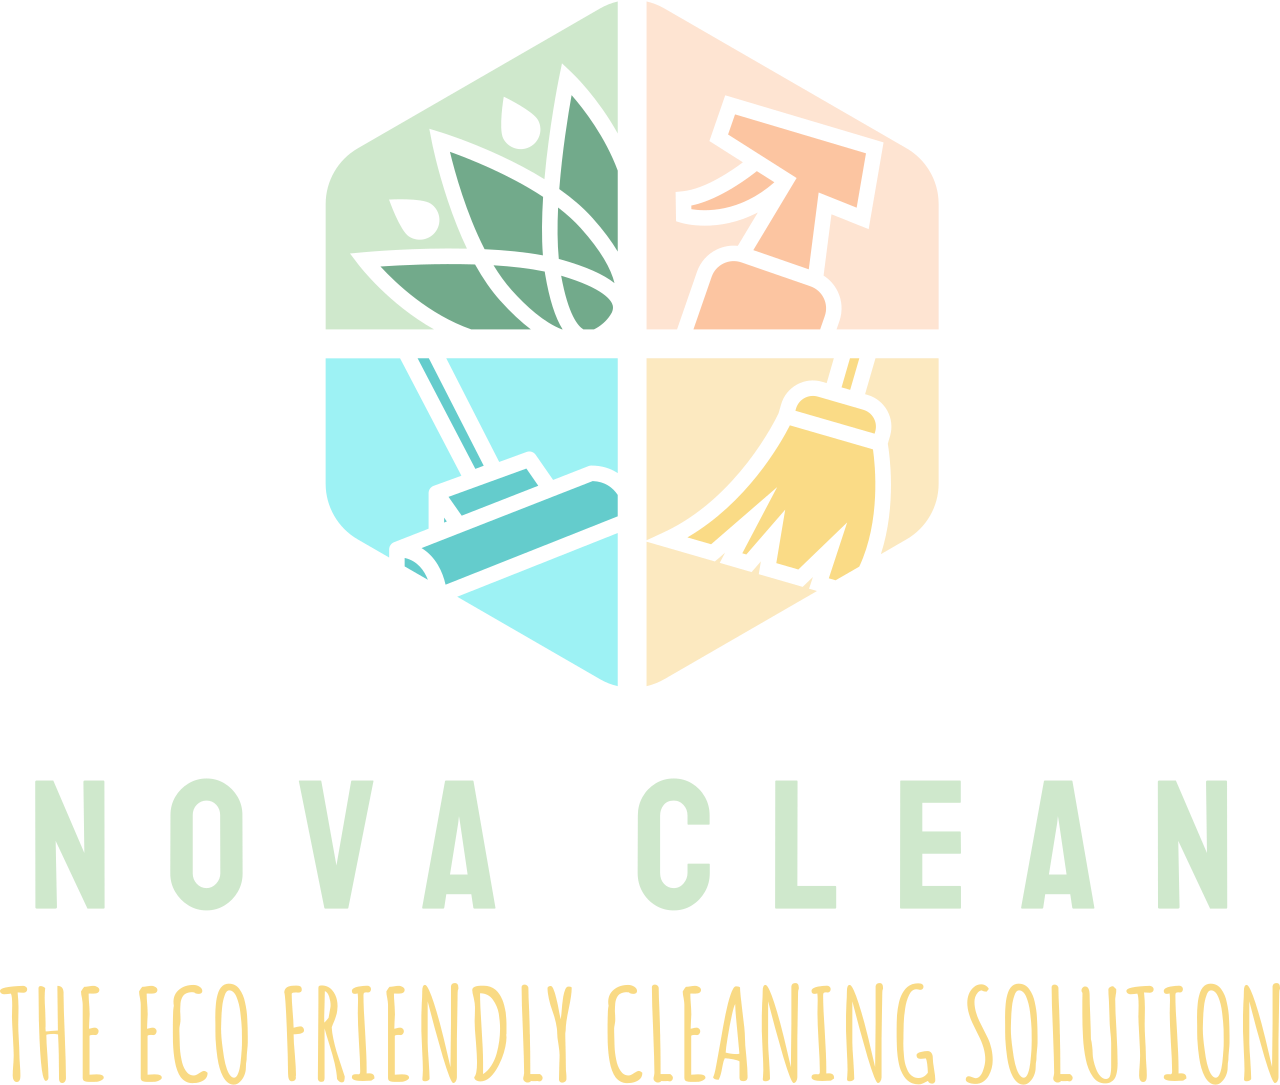 Nova Clean's web page